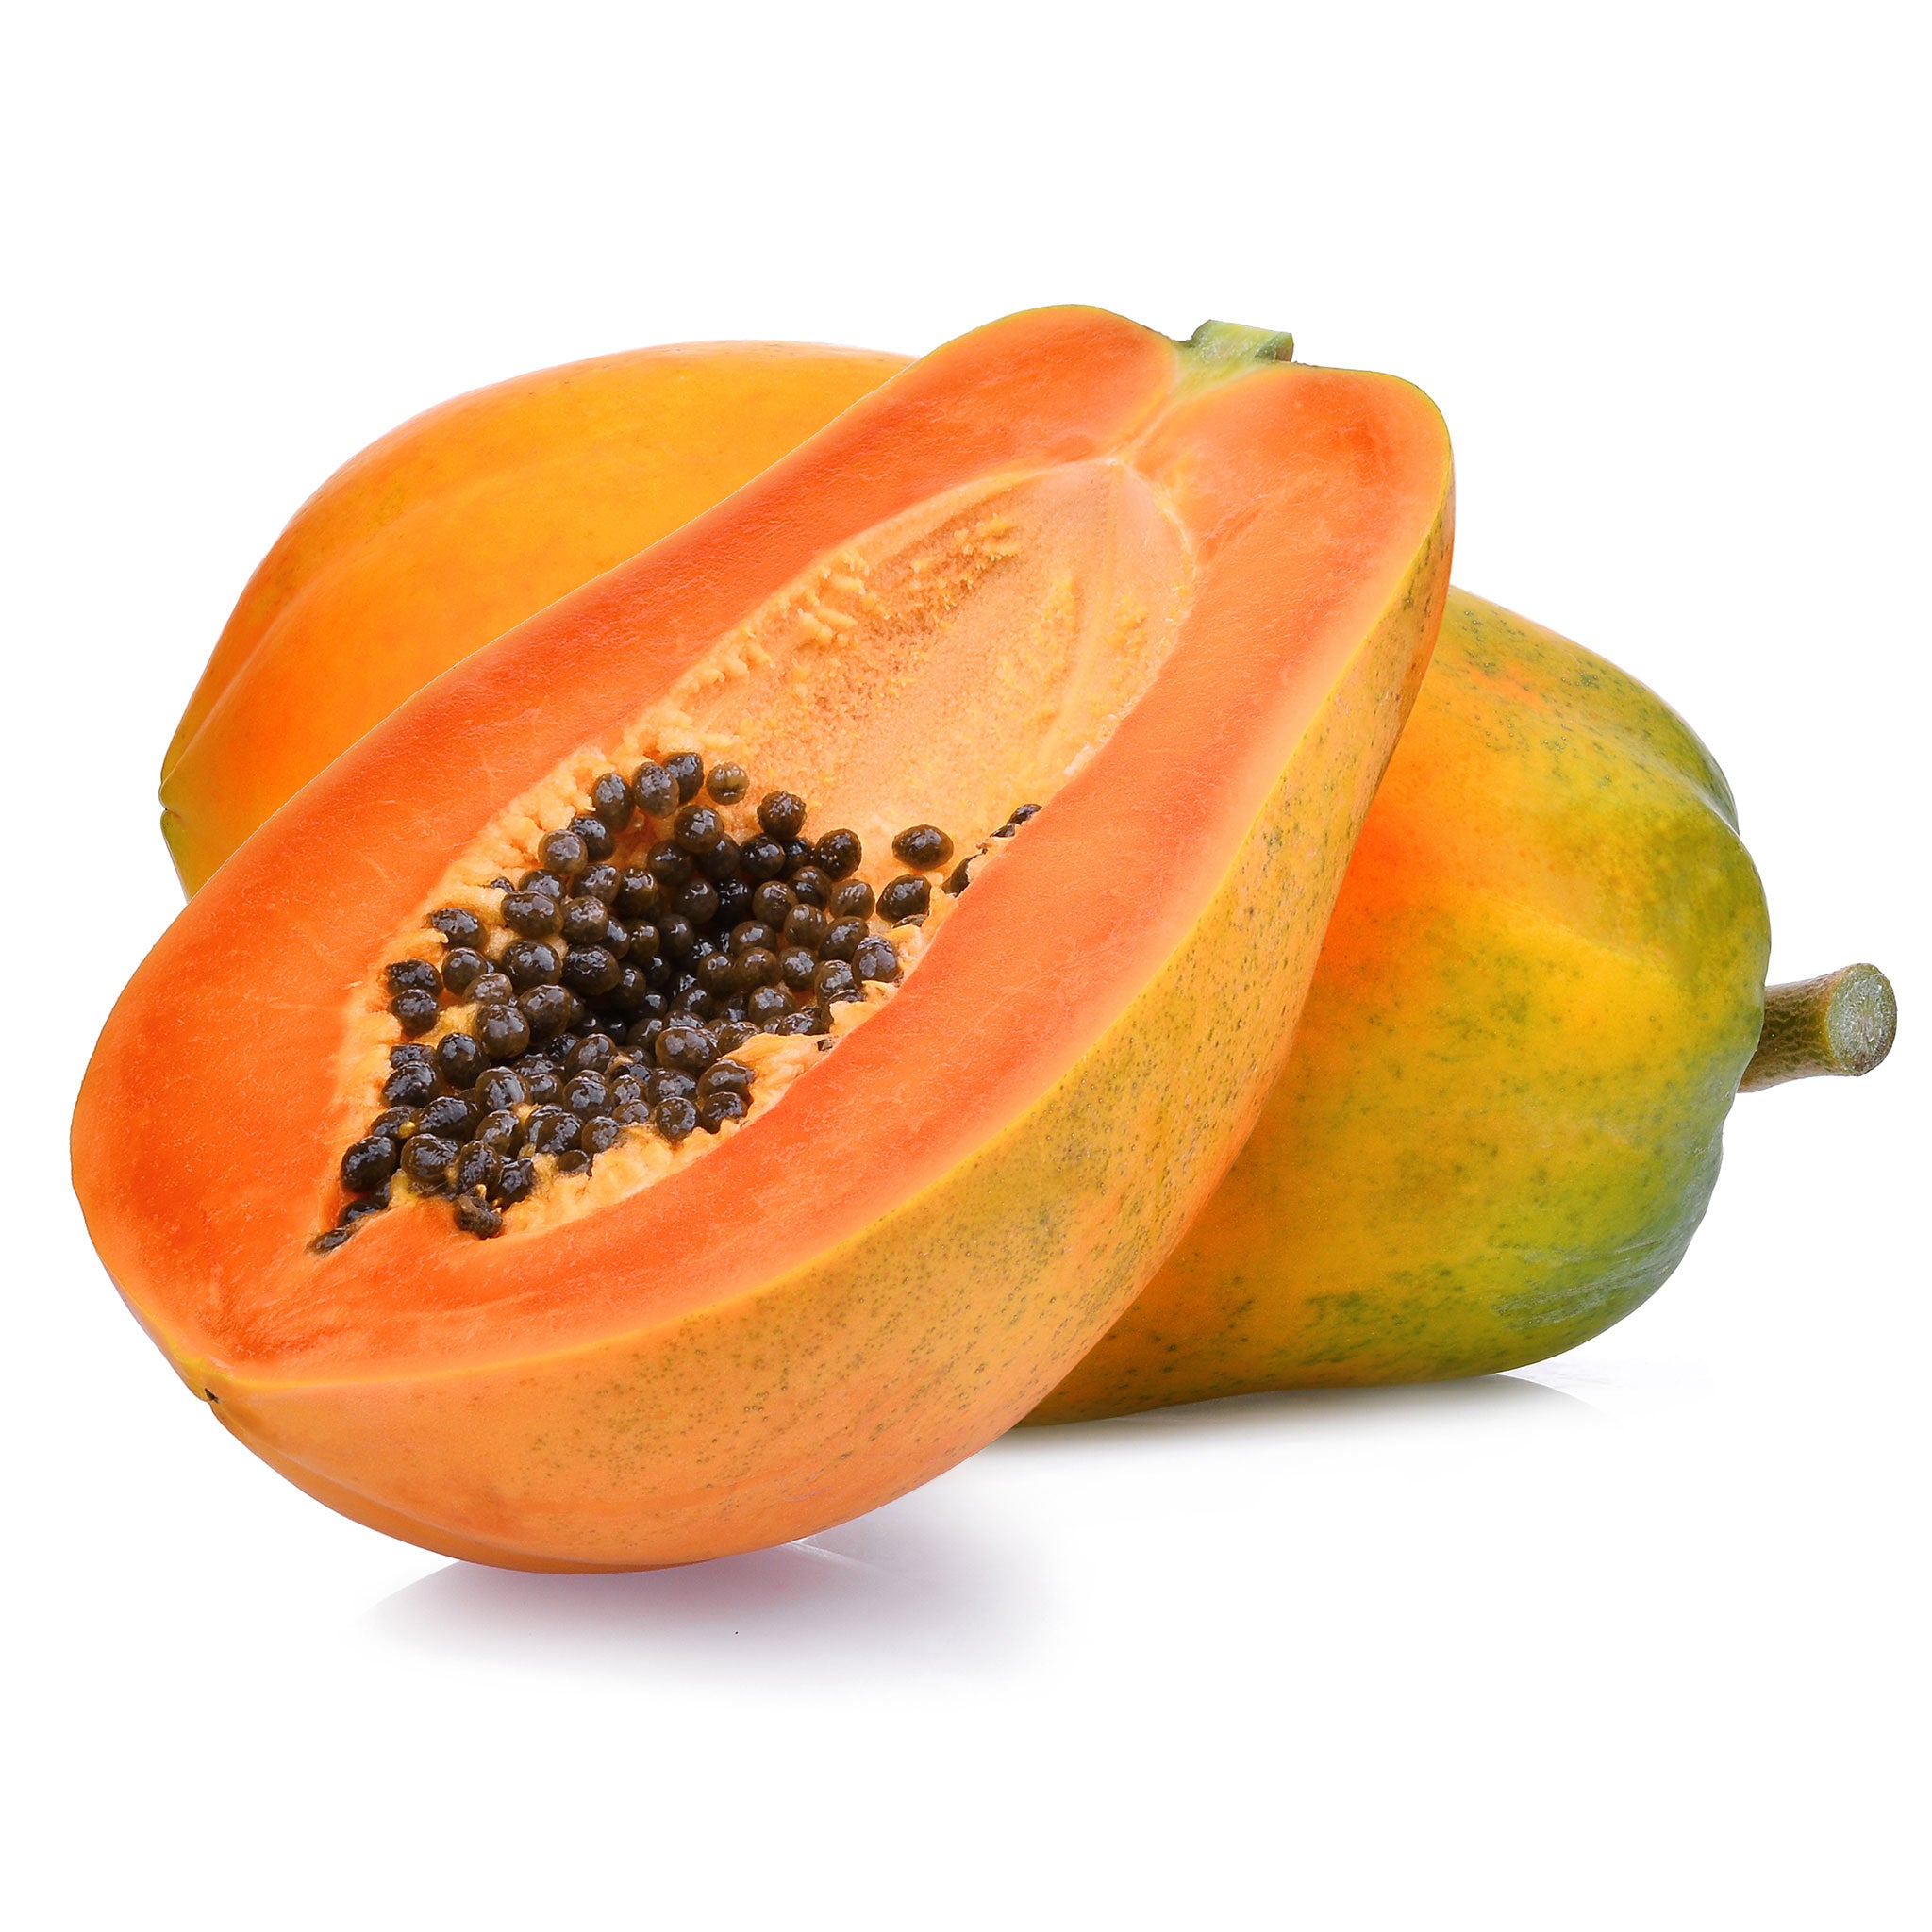 Thai Yellow Large Papaya Fruit - Imported Weekly from Thailand